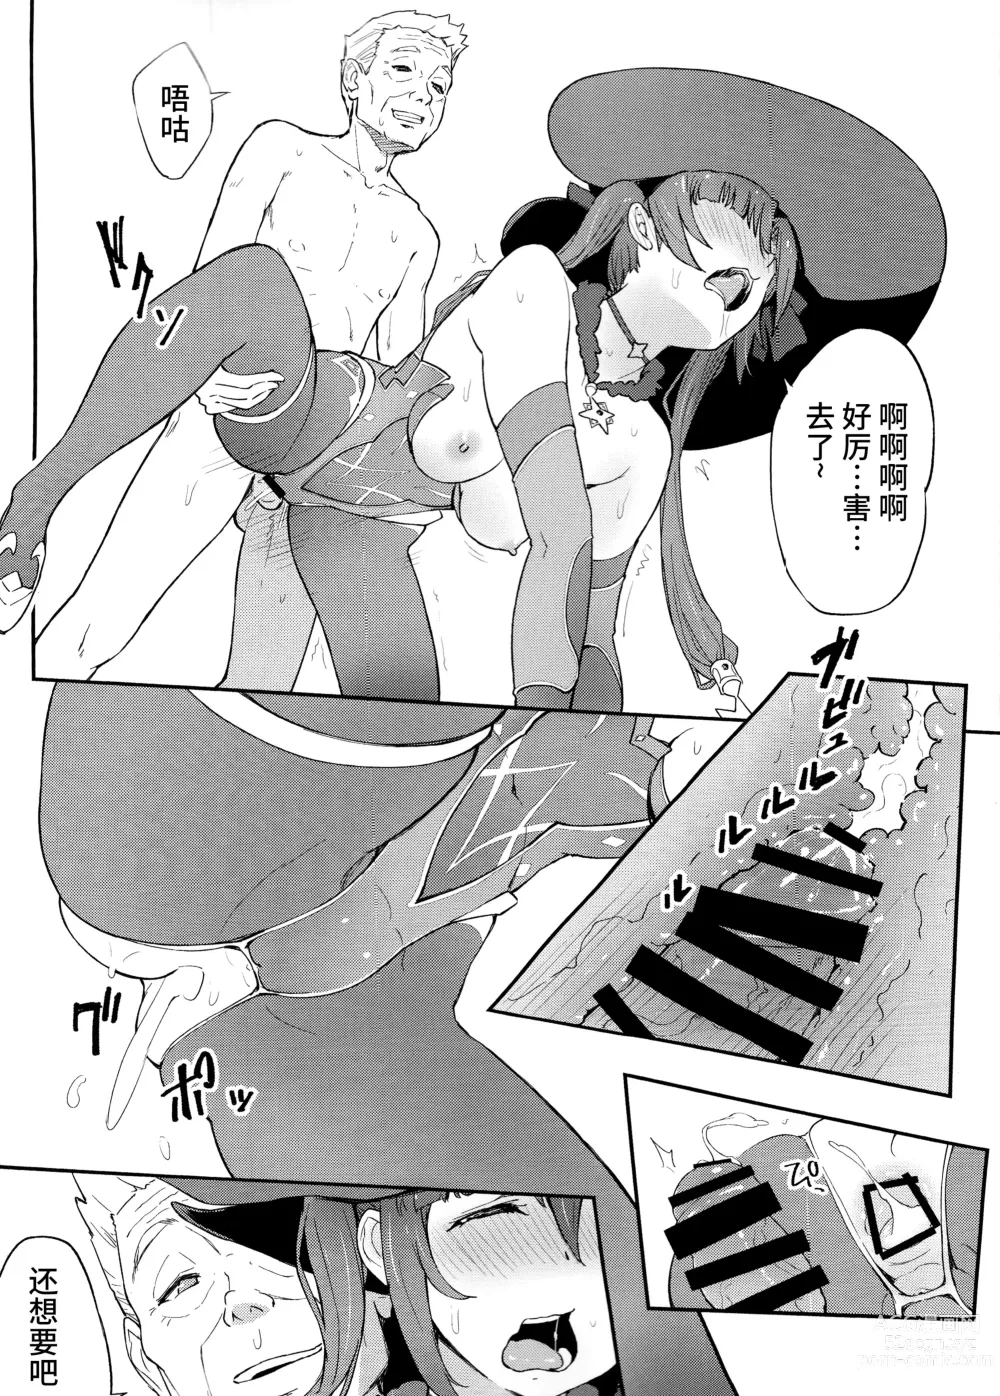 Page 5 of doujinshi Mona-Gete 3